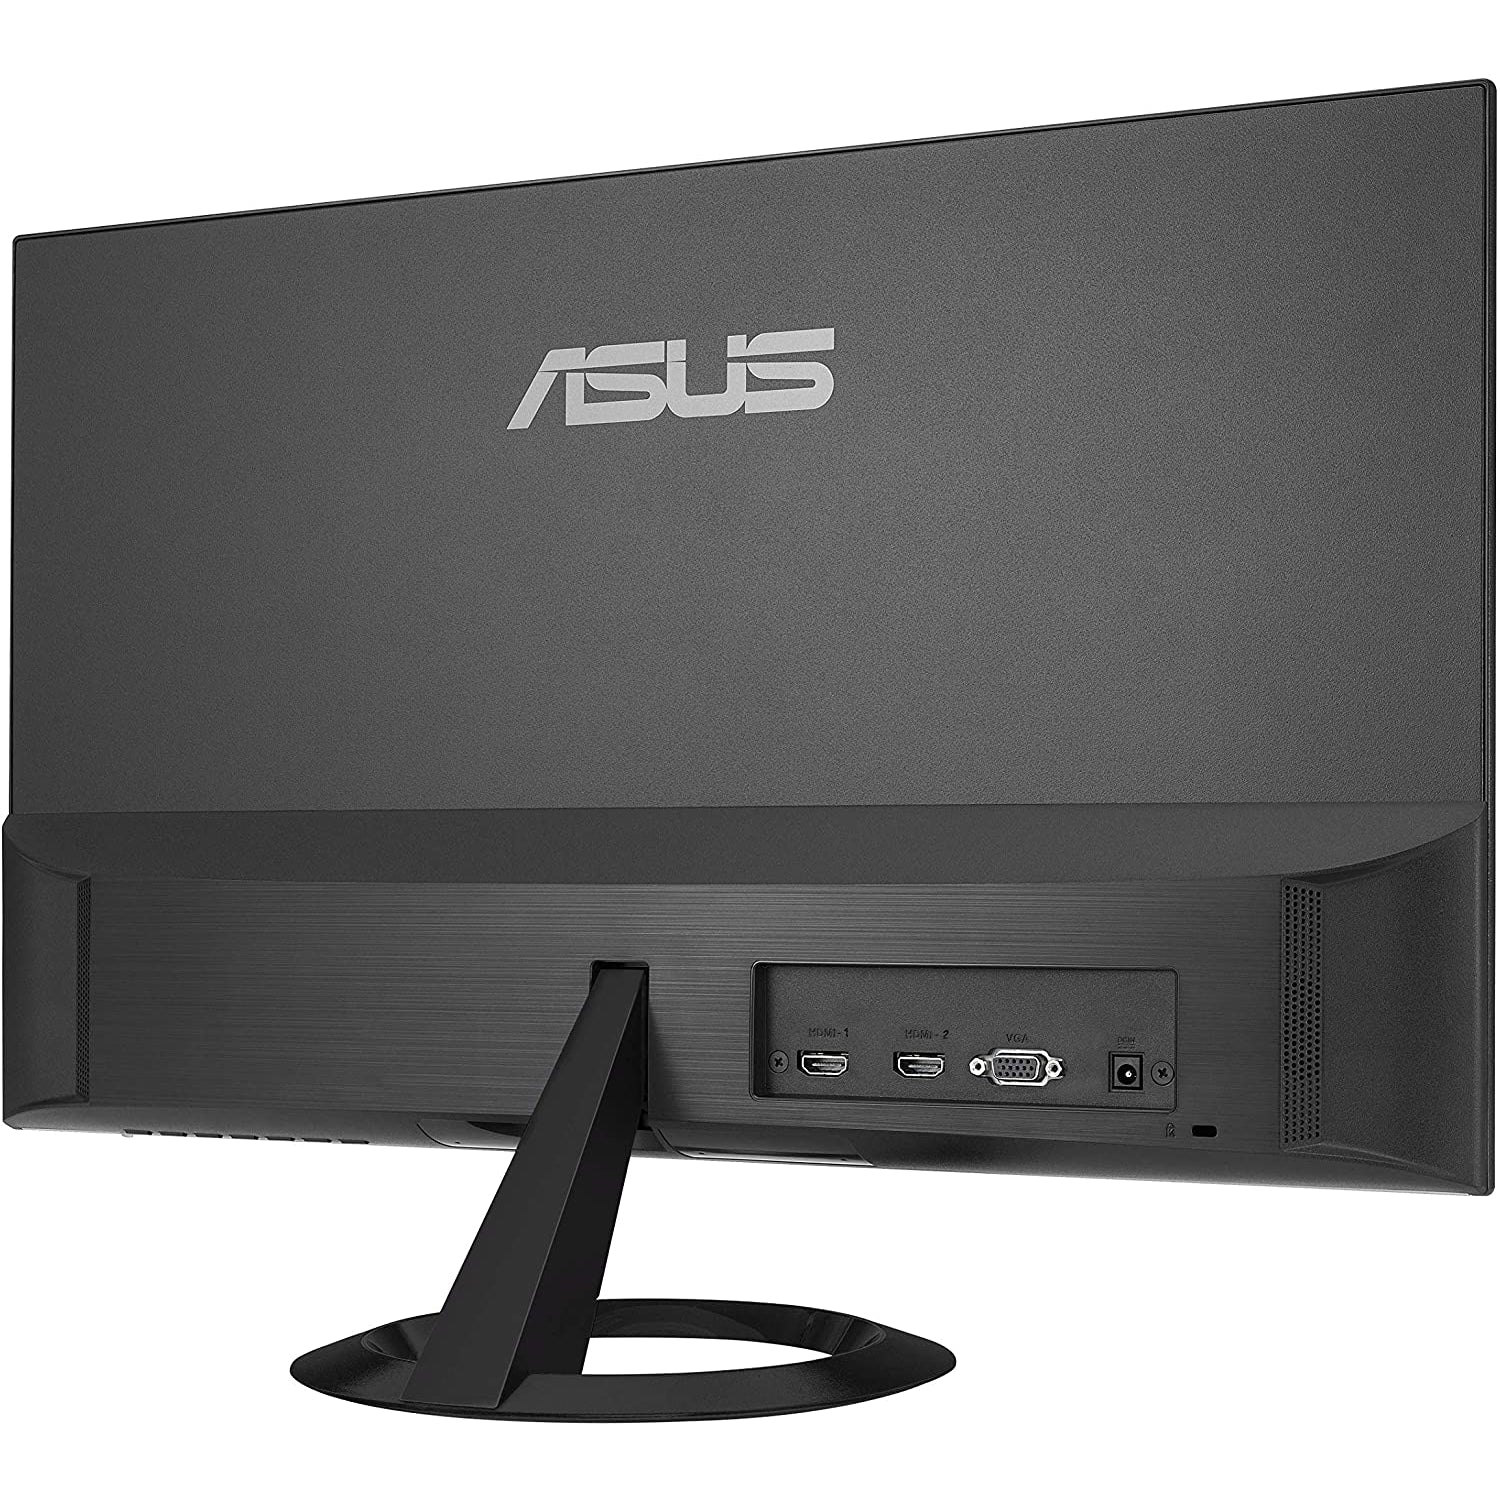 ASUS VZ279HE 27 Inch Monitor, FHD (1920 x 1080), Ultra-Slim Design, HDMI, Flicker Free, Black